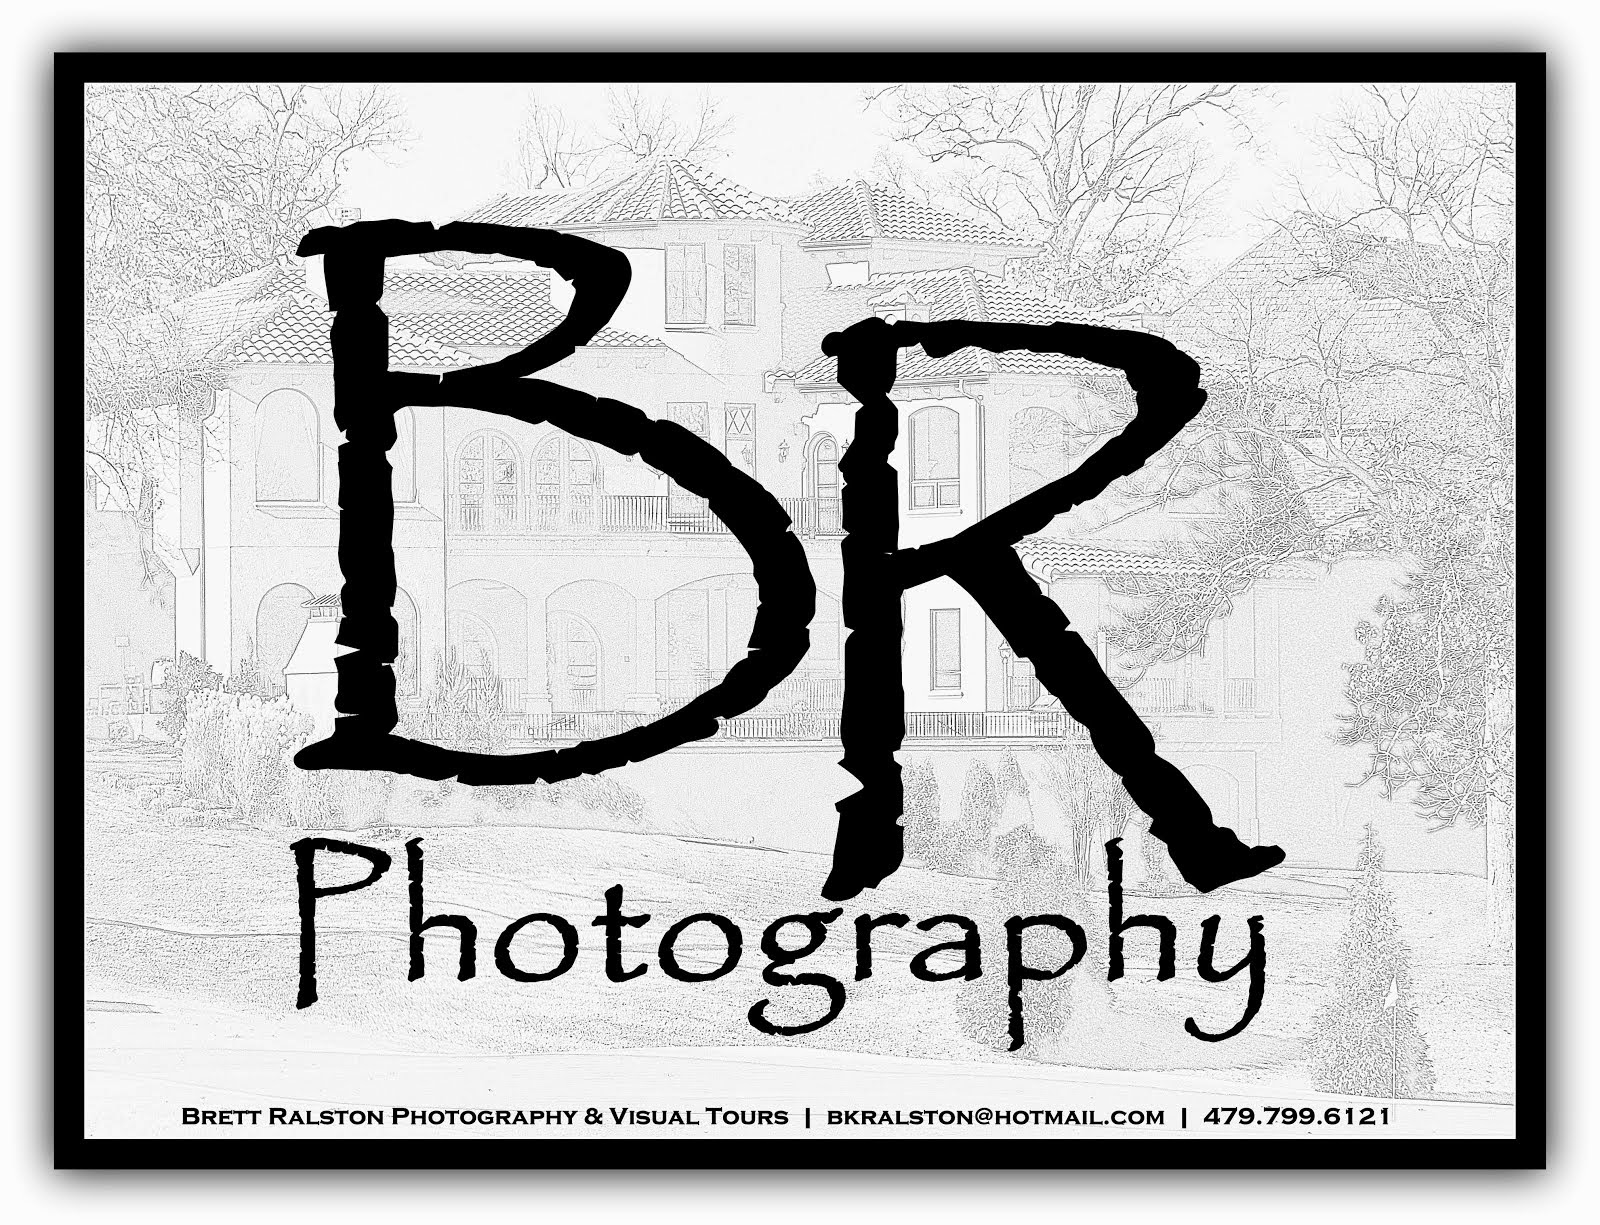 Brett Ralston Photography & Visual Tours